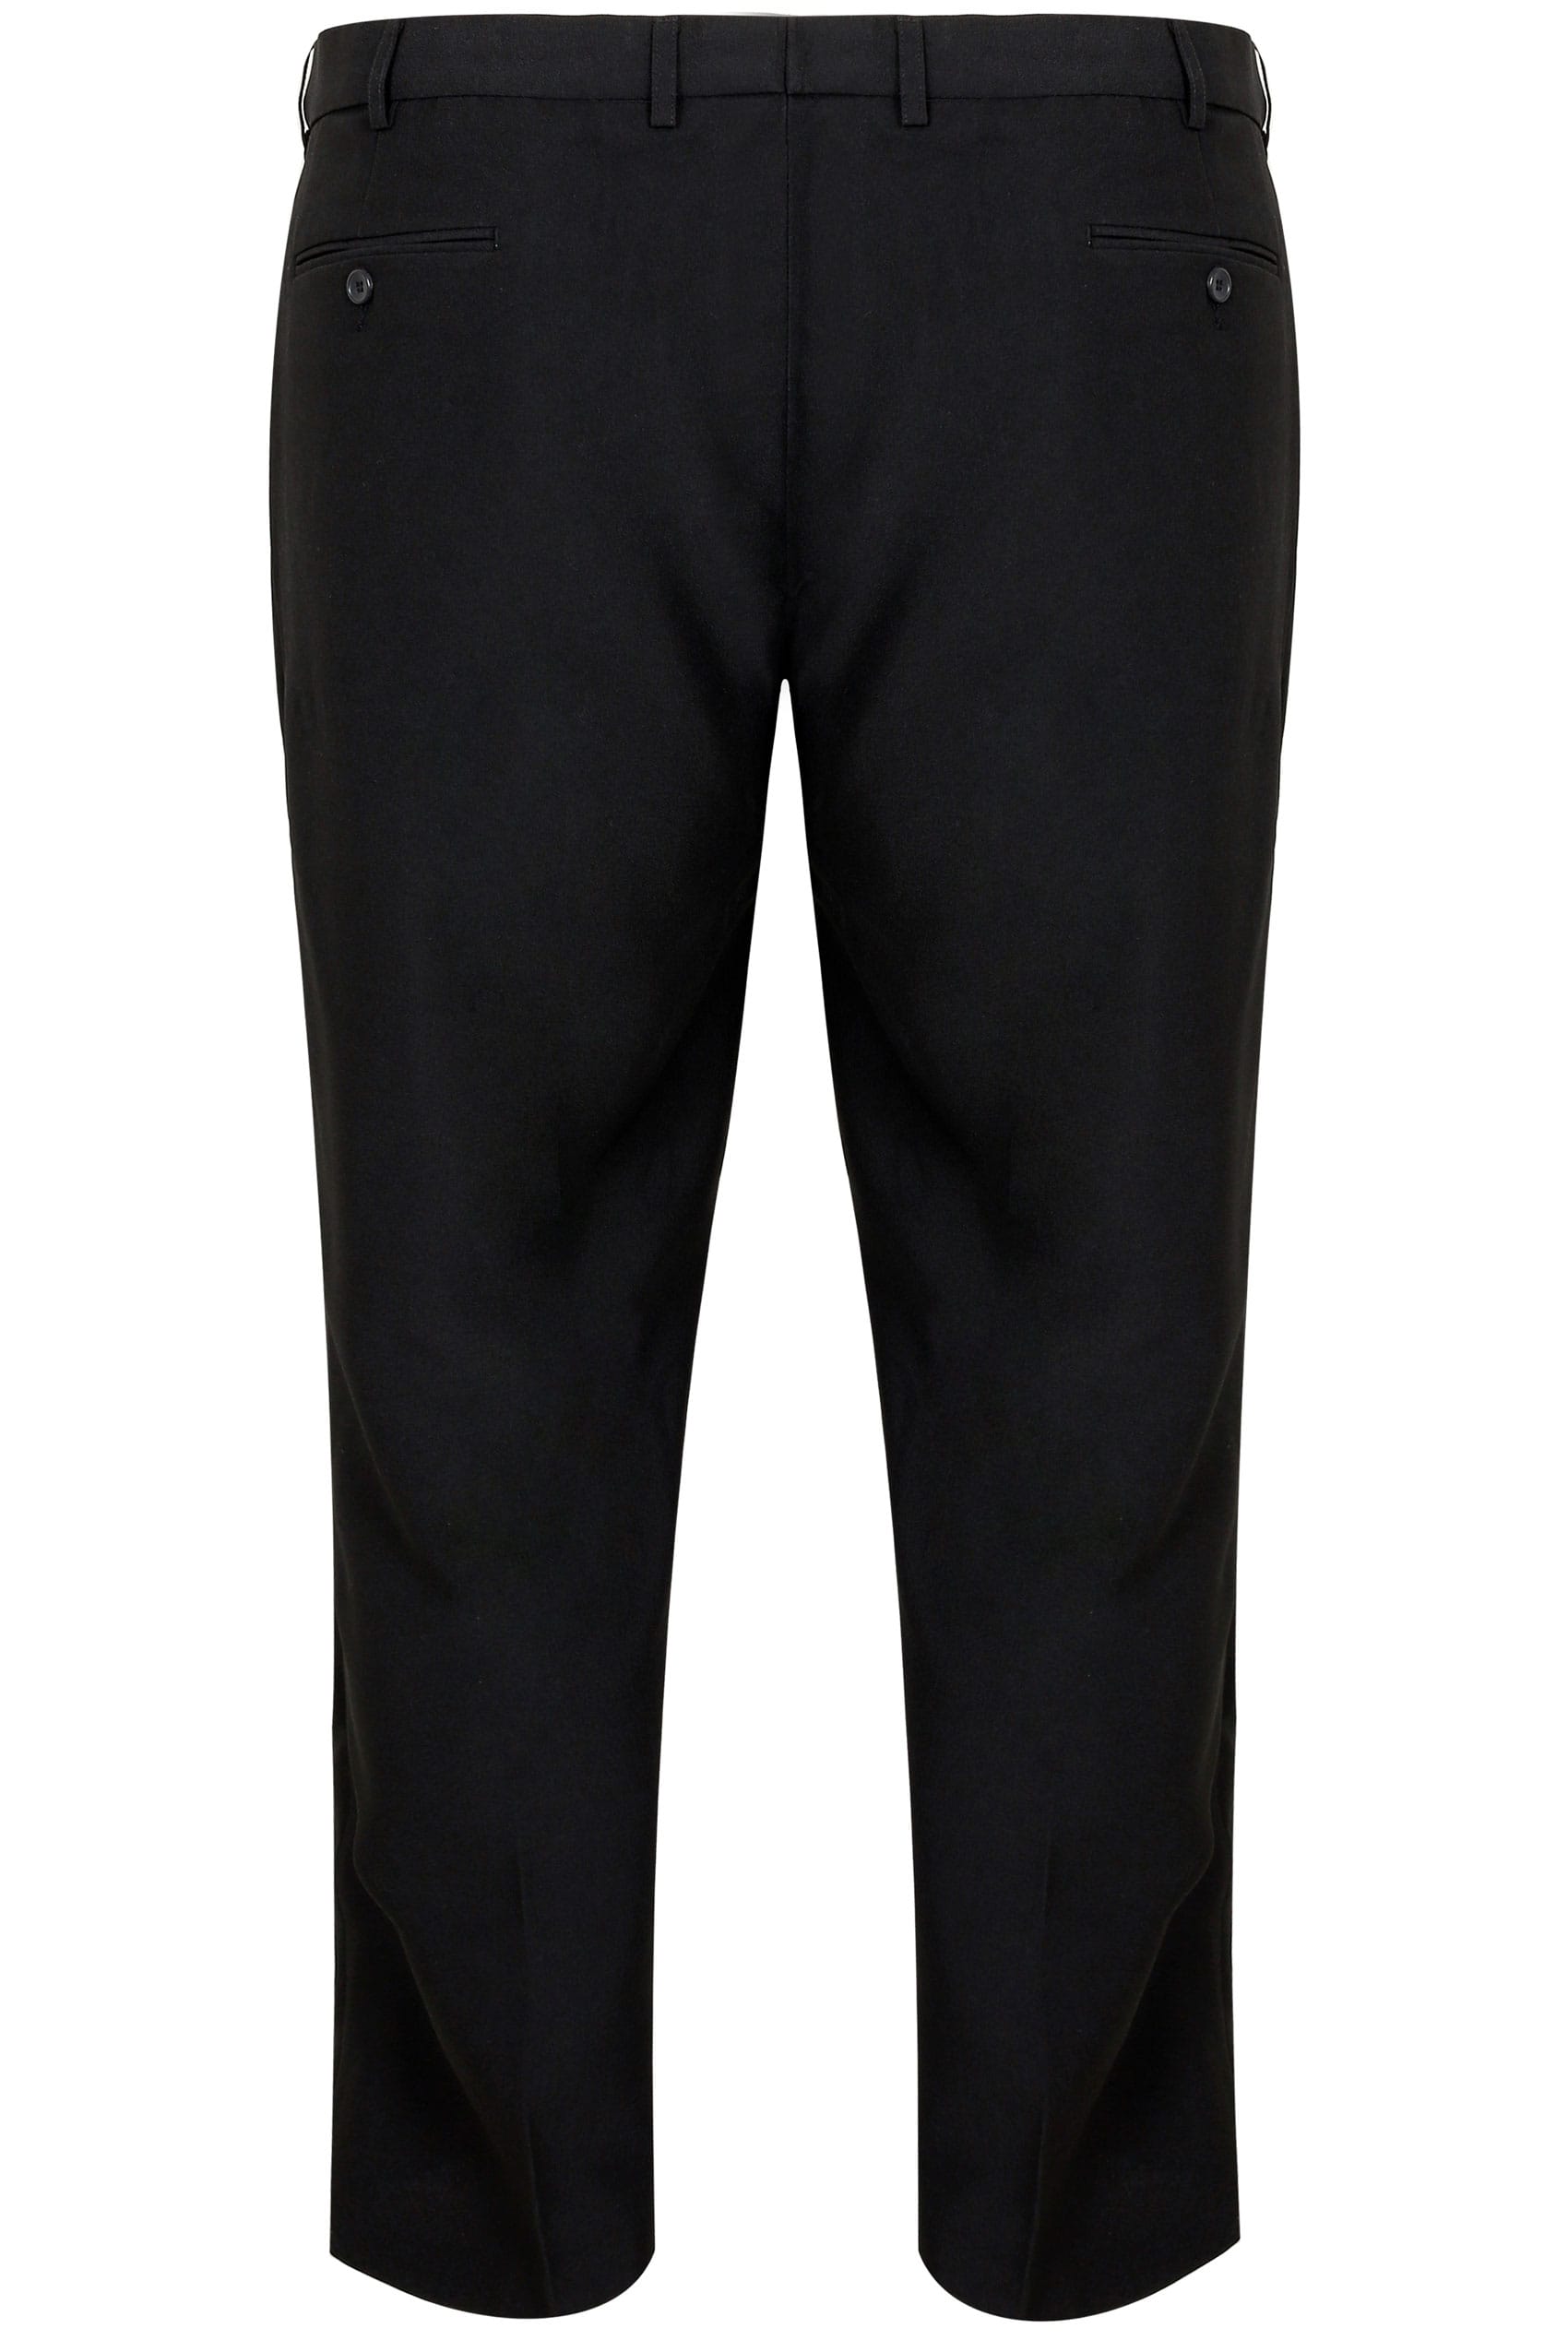 Male Healthcare Trousers Black NM30BK | Alexandra Workwear